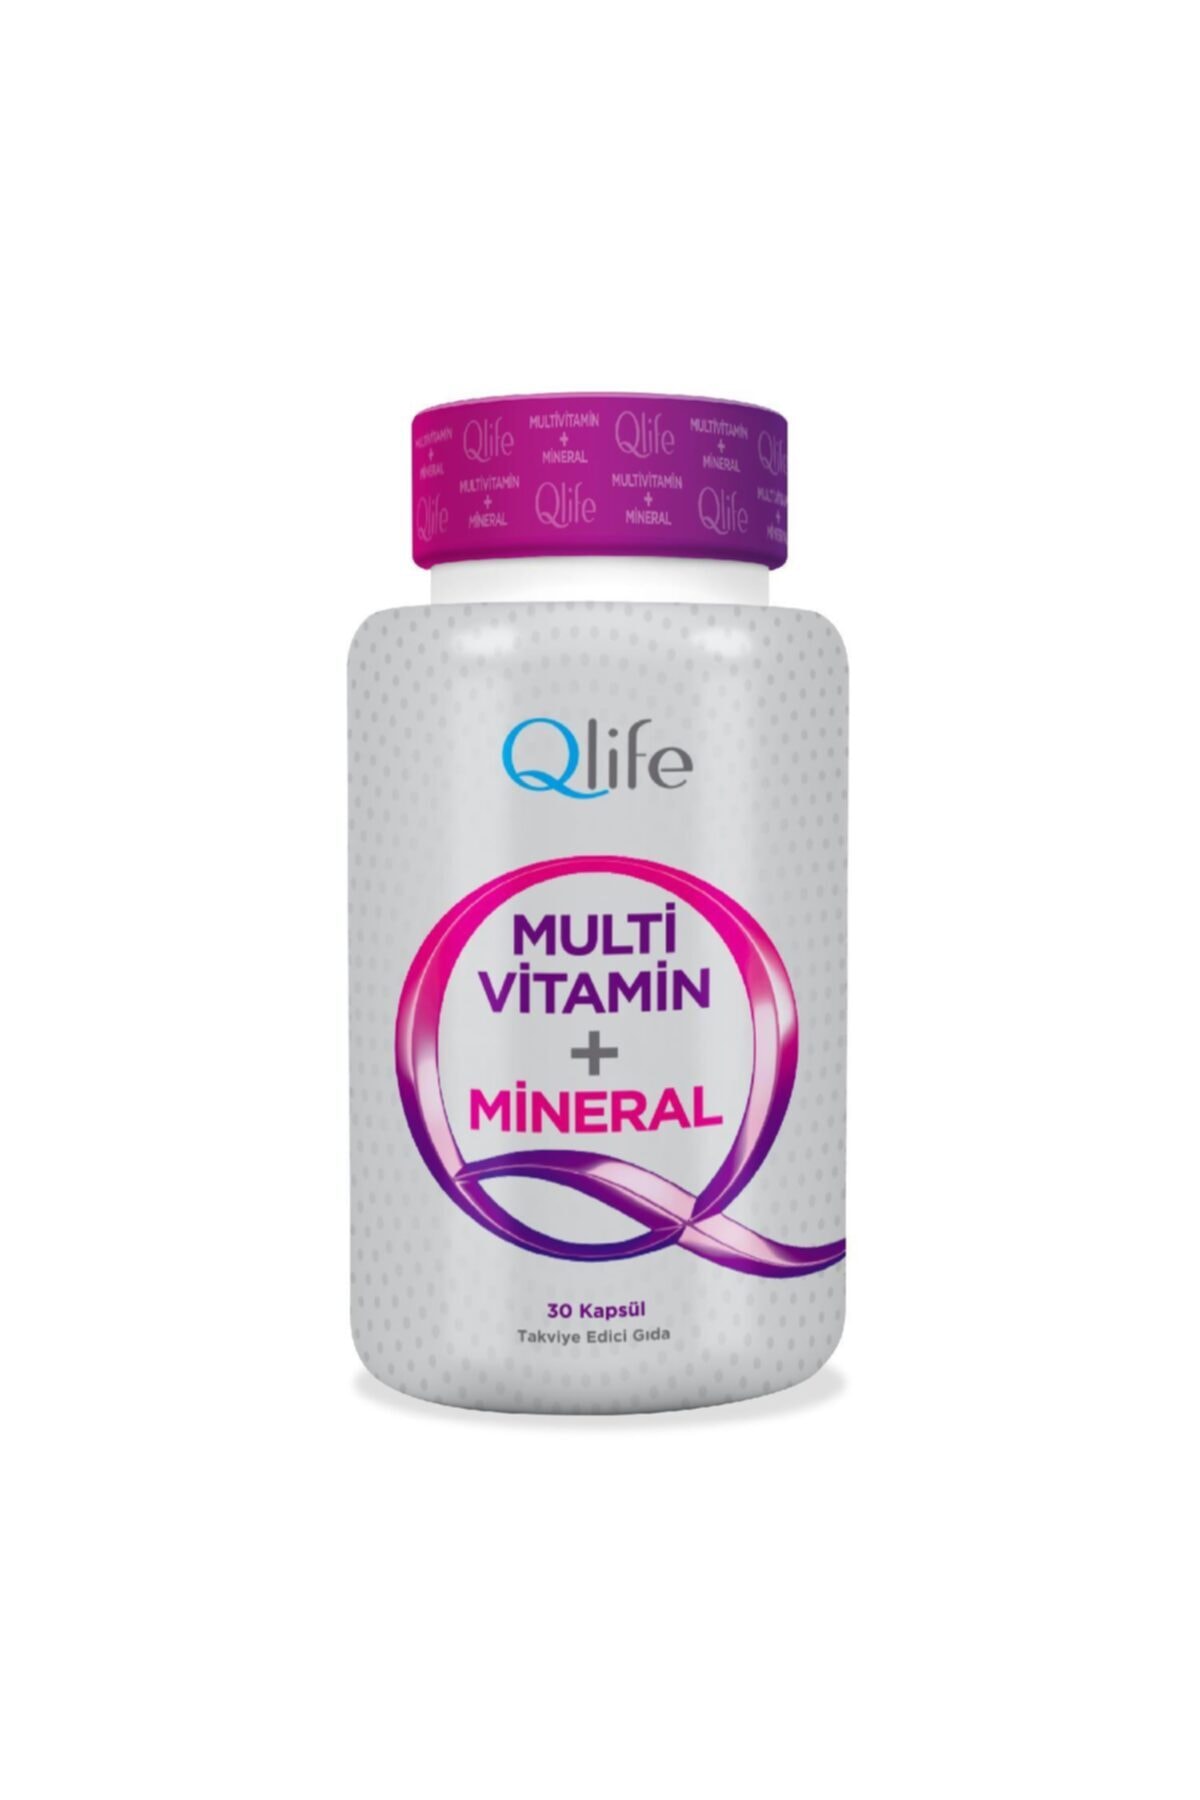 Qlife Multivitamin + Mineral 30 Kapsül